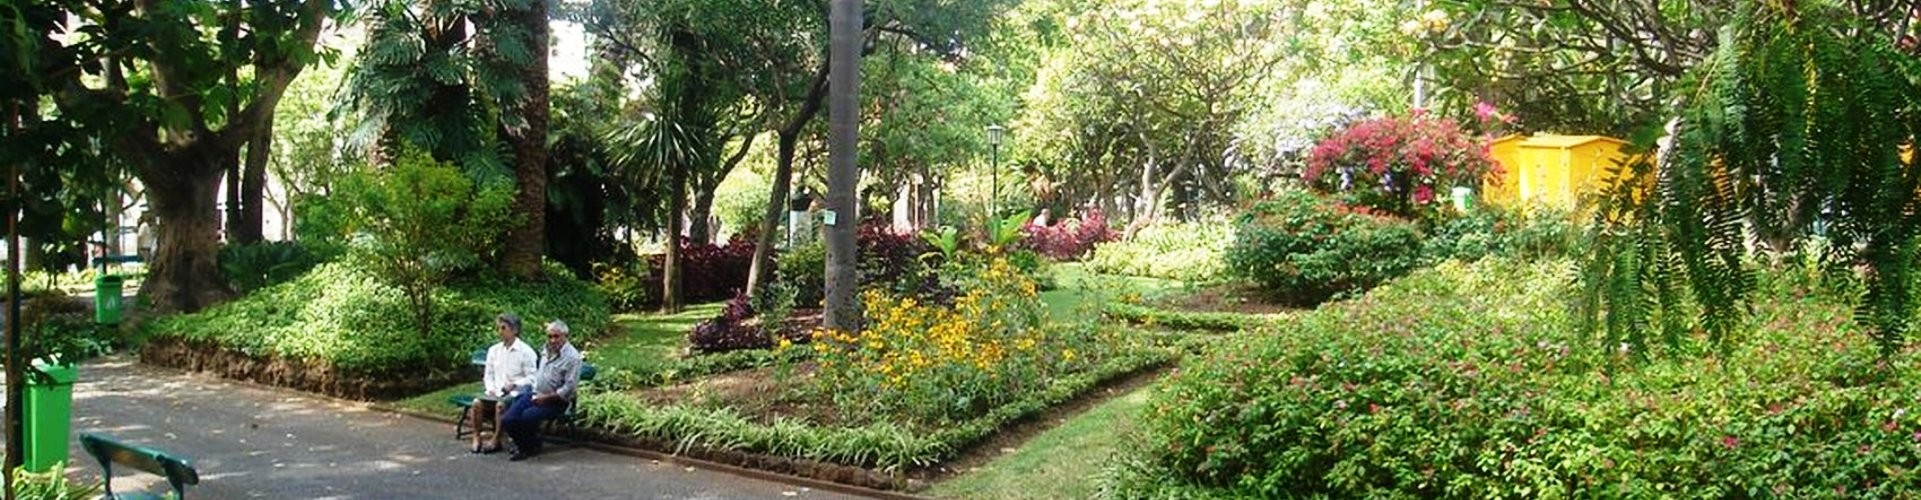 Jardim Funchal Municipal Garden, Madeira